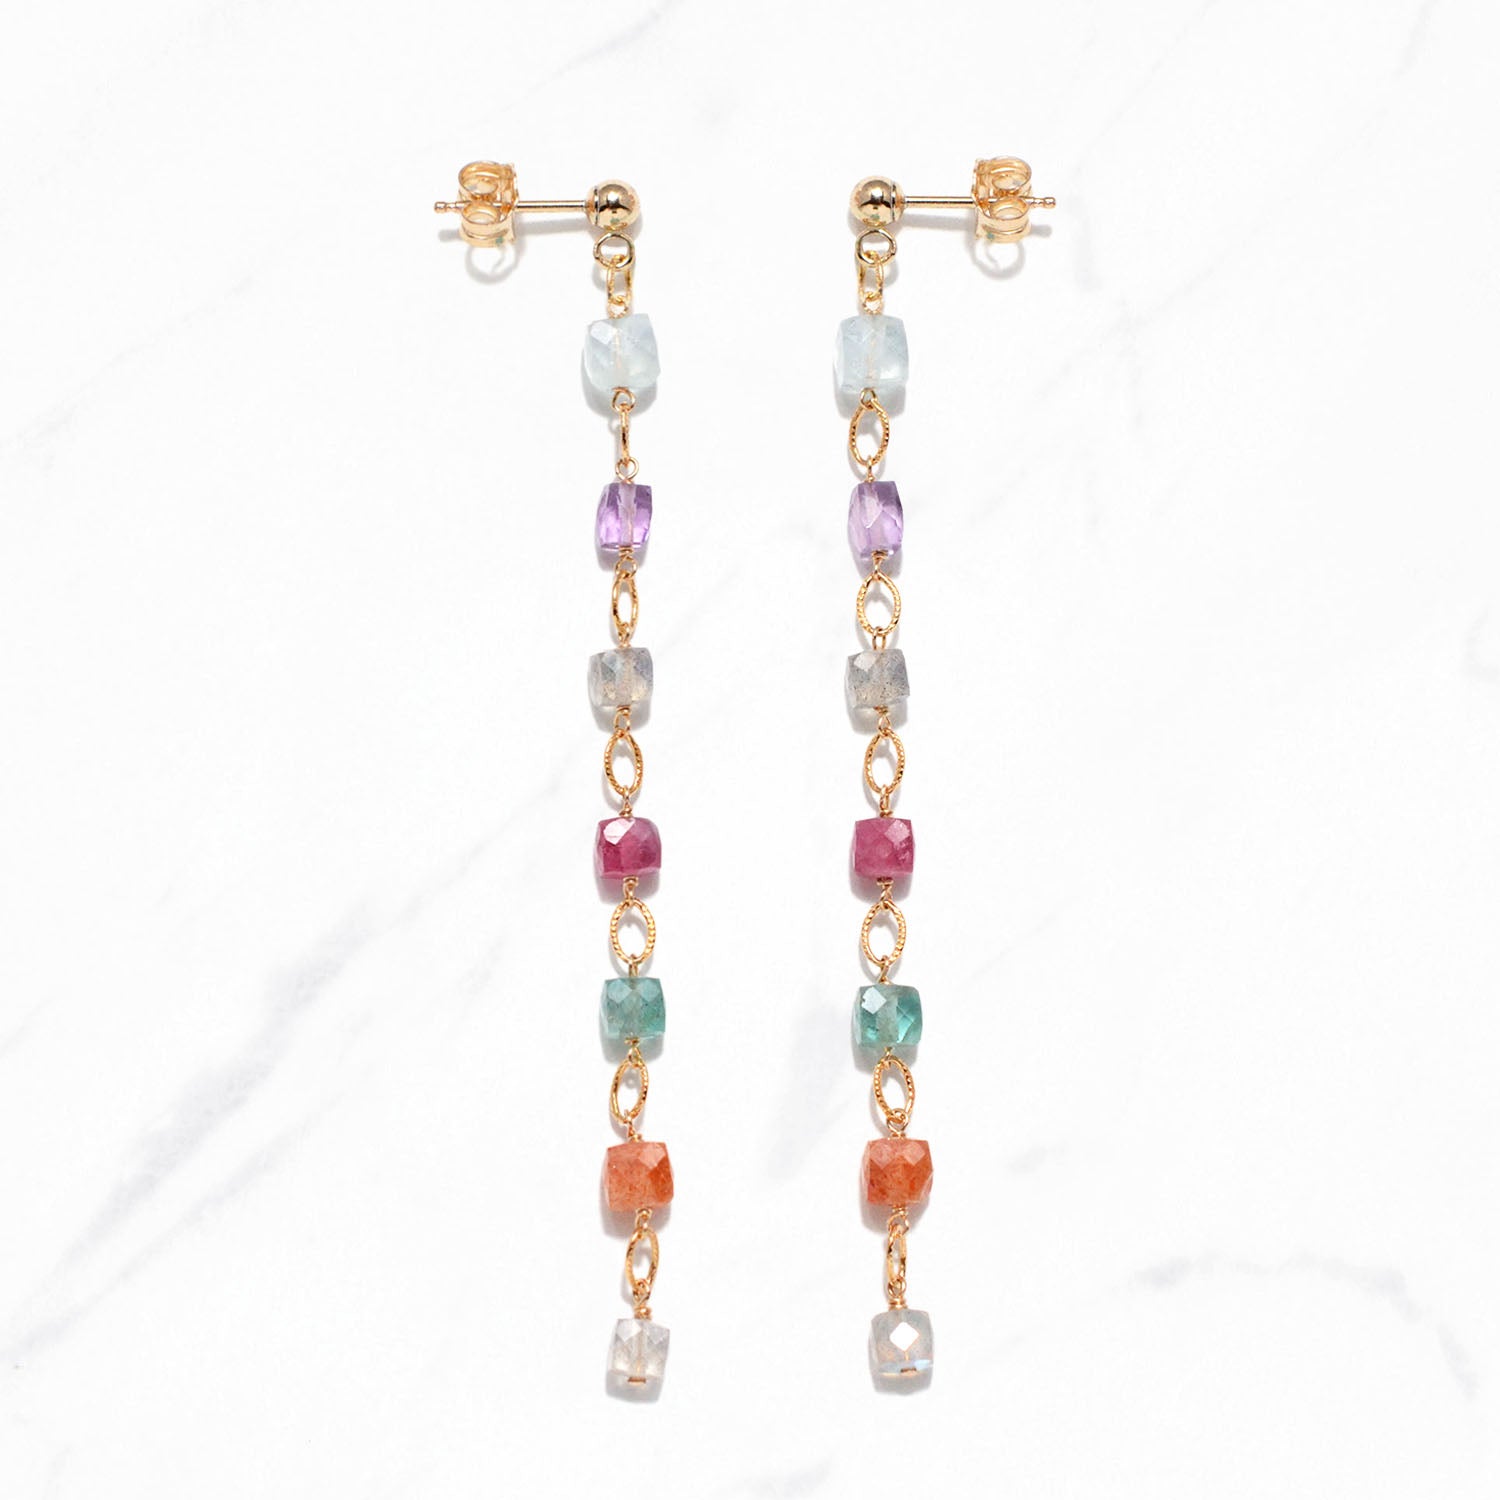 Colorful Gemstones Dangling Earrings (Multicolor)